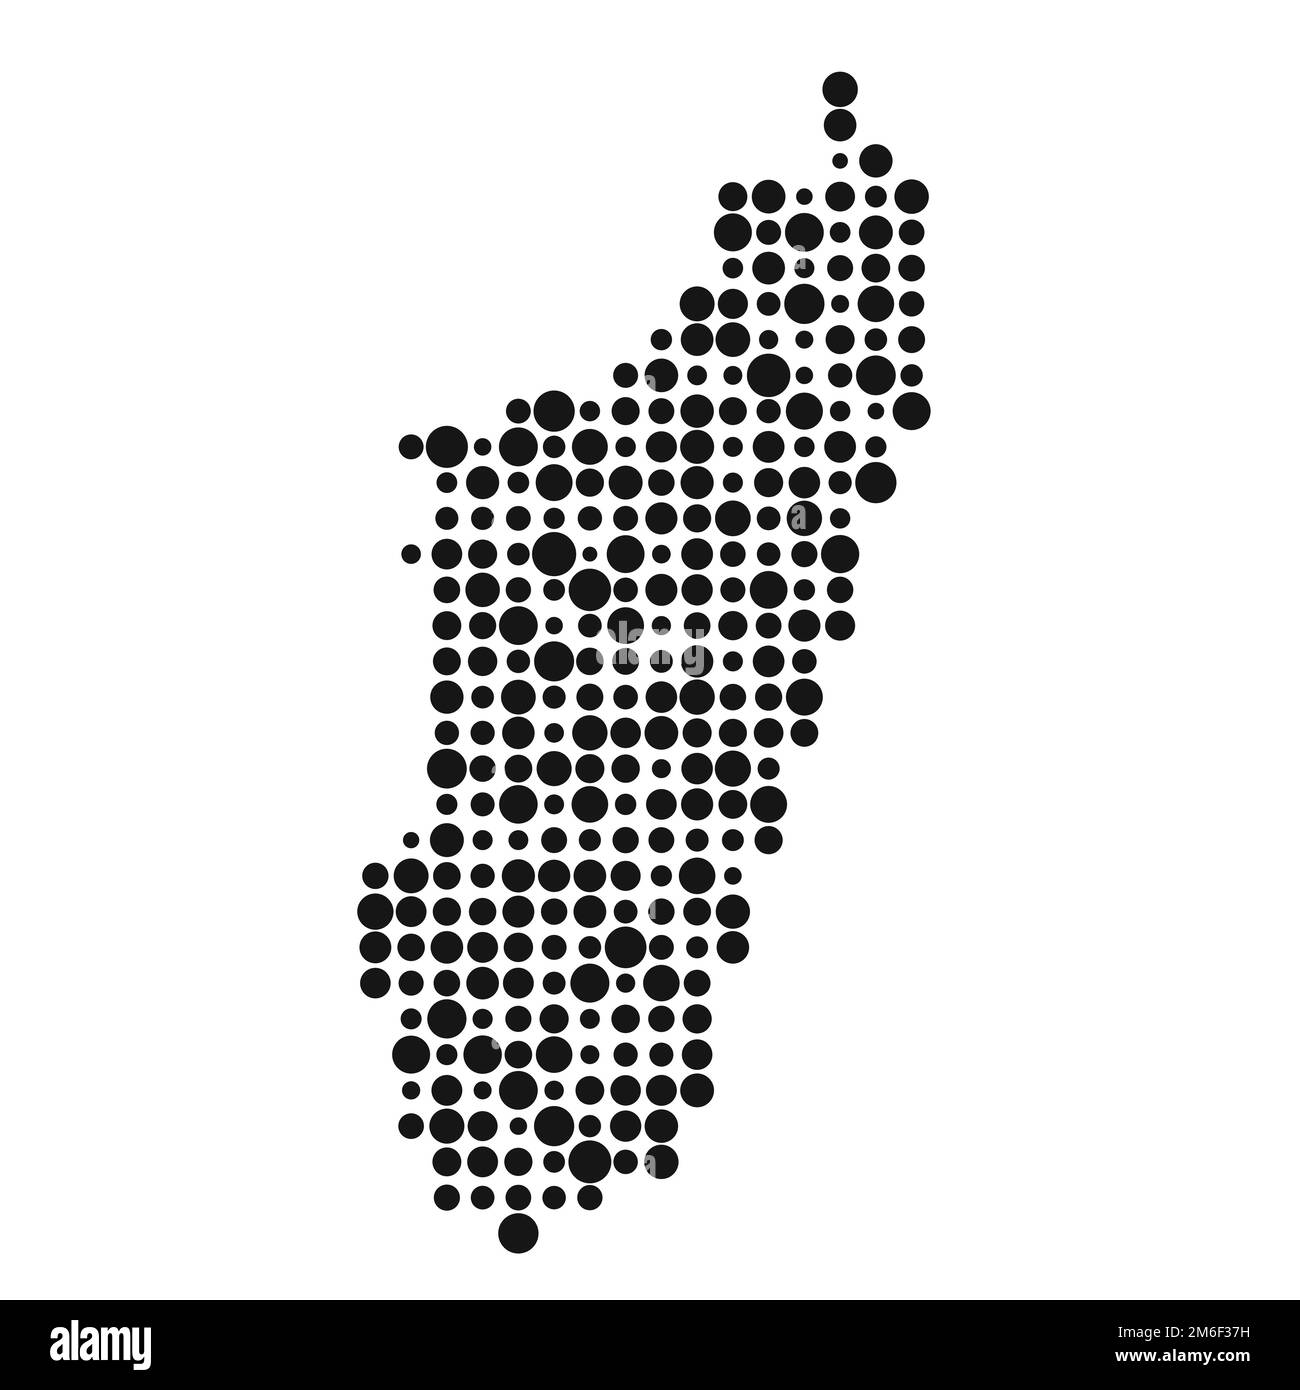 Madagascar Map Silhouette Pixelated generative pattern illustration Stock Vector